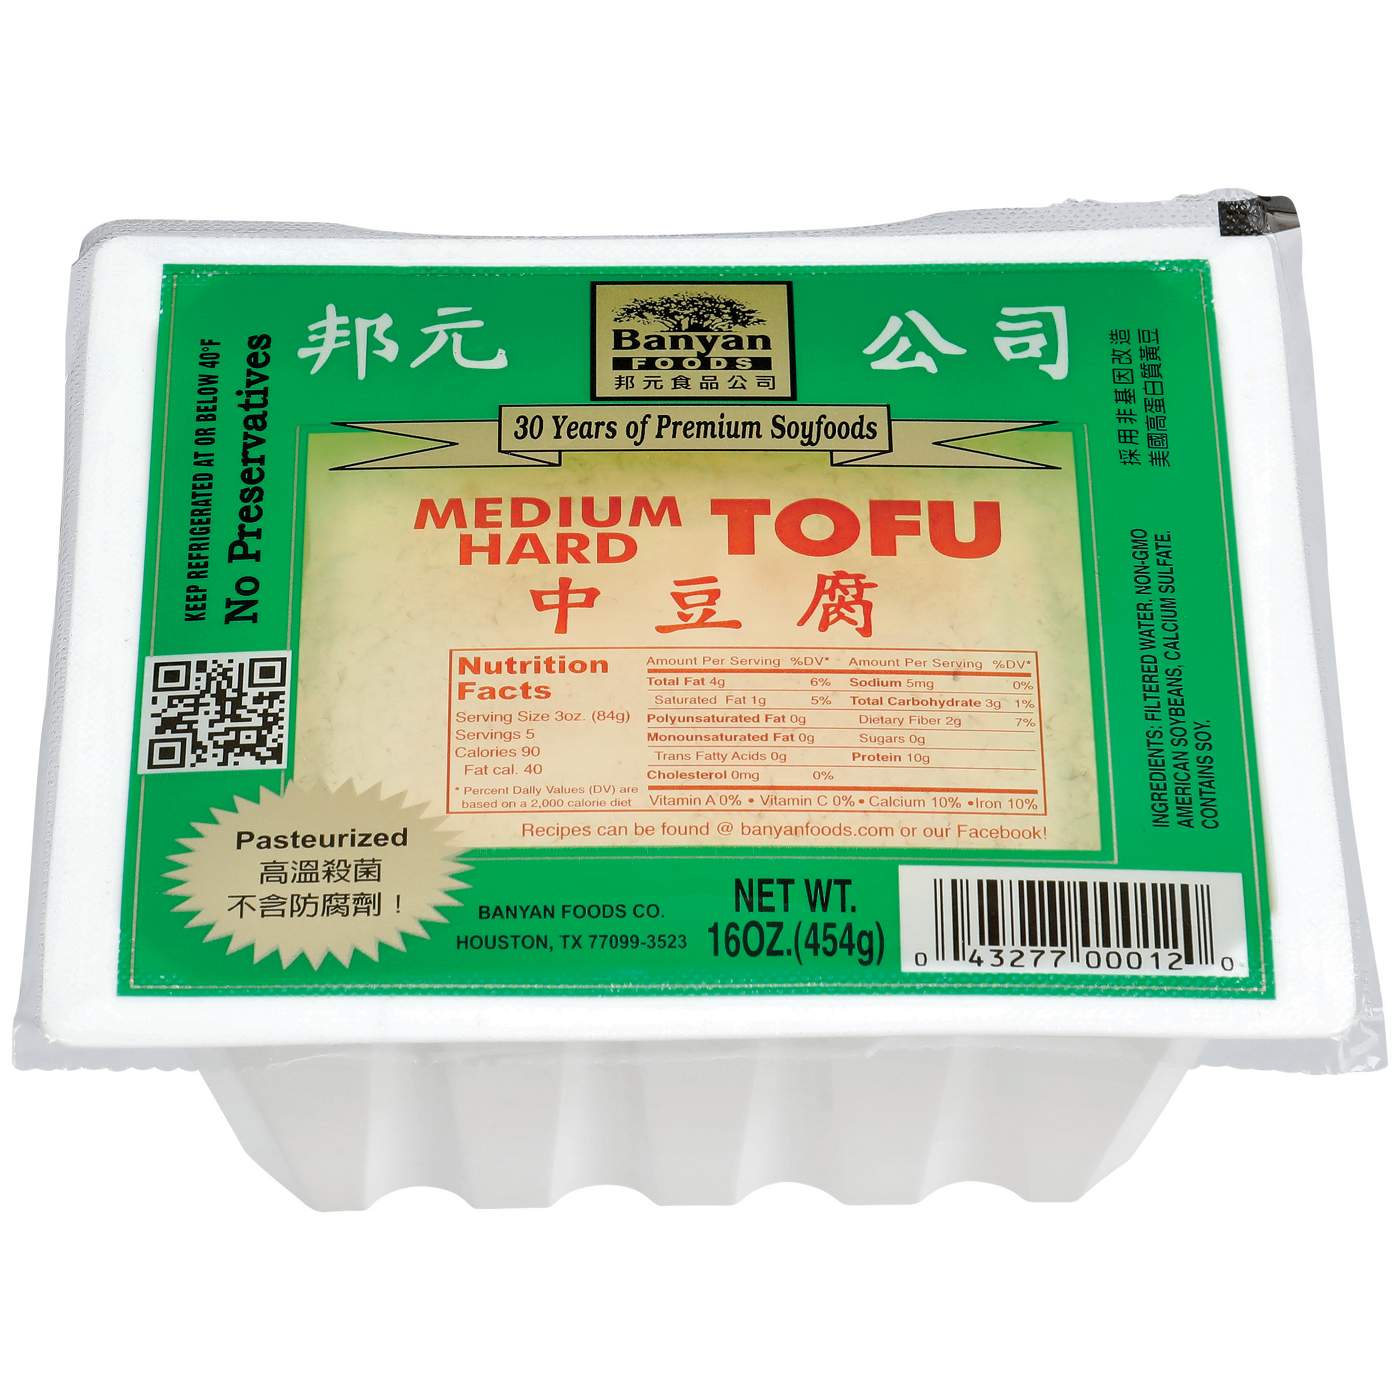 Banyan Foods Medium Firm Tofu; image 1 of 2